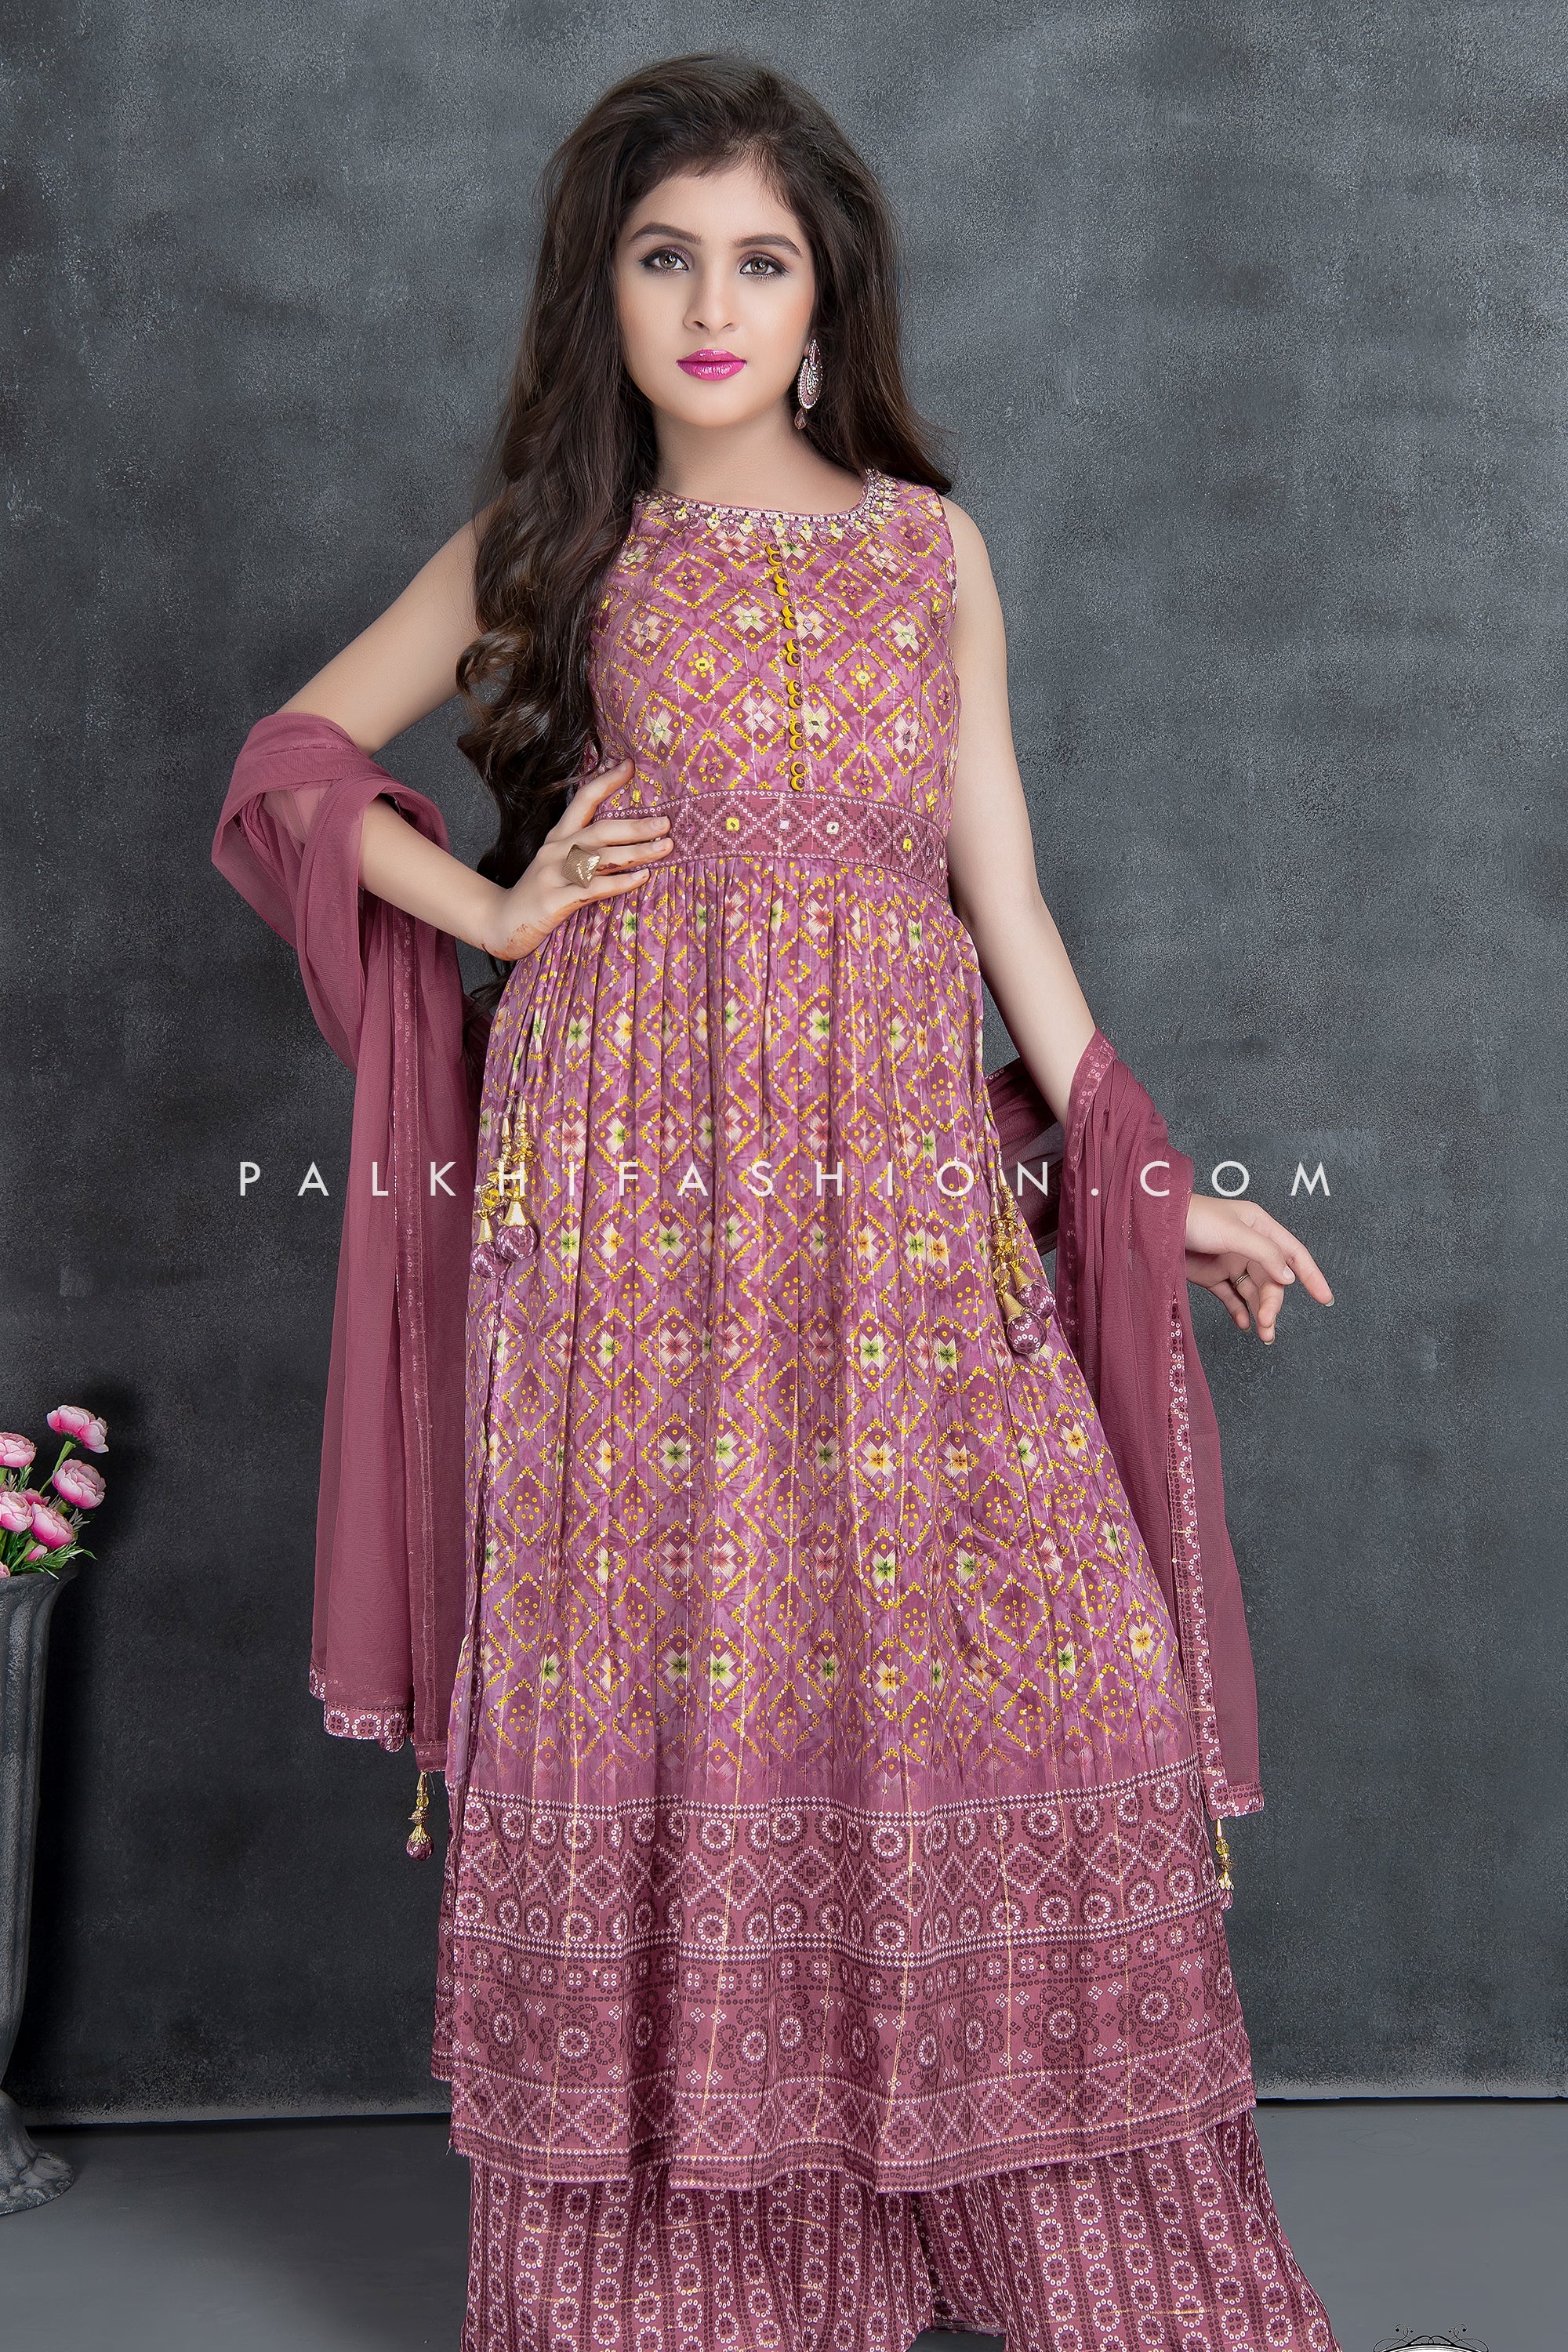 Powder Blue Indian Outfit With Elegant Work – Palkhi Fashion